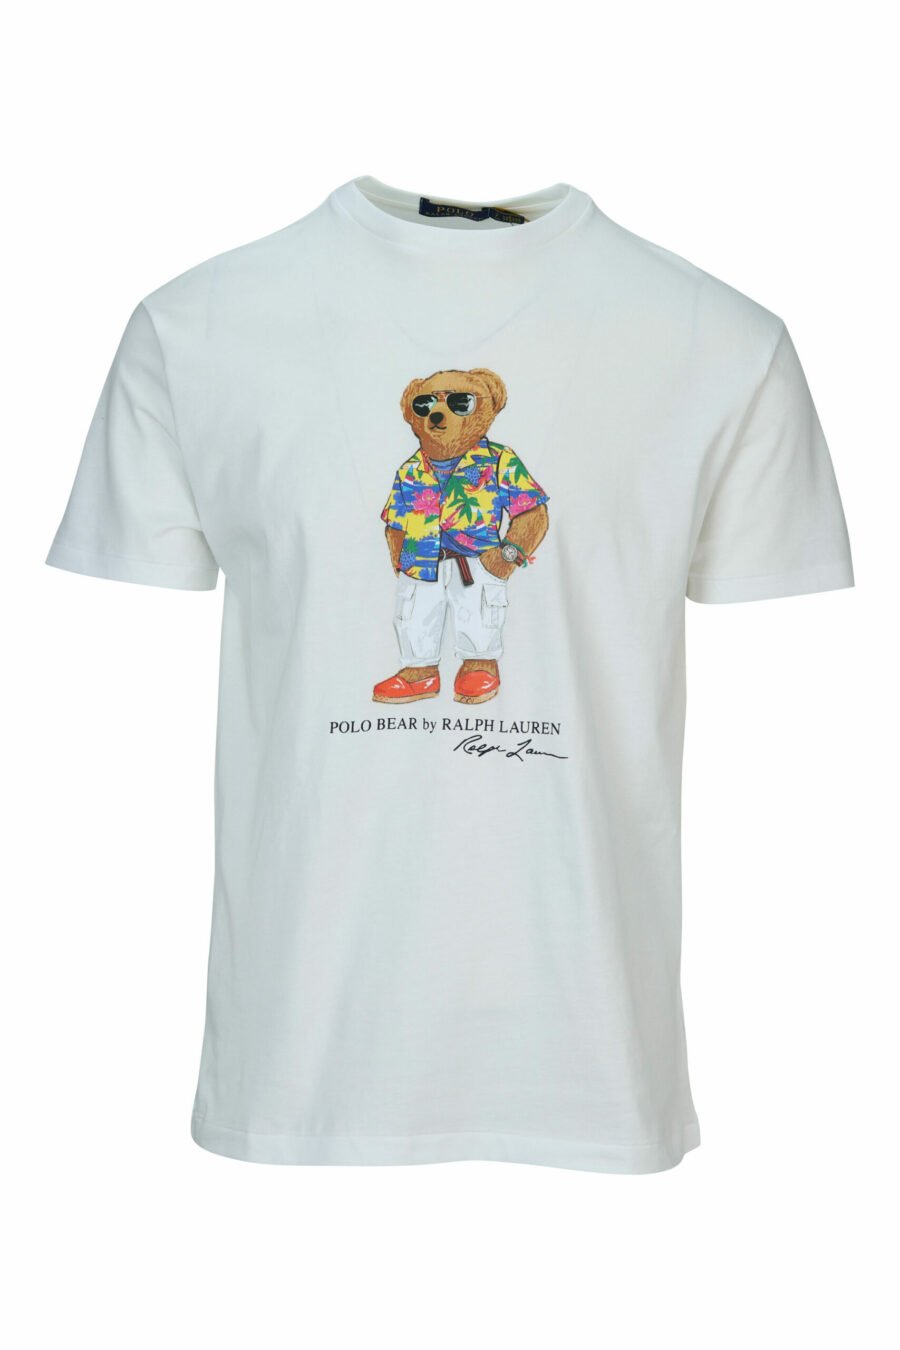 T-shirt blanc avec maxilogo "polo bear" beachwear - 3616535843479 échelonné